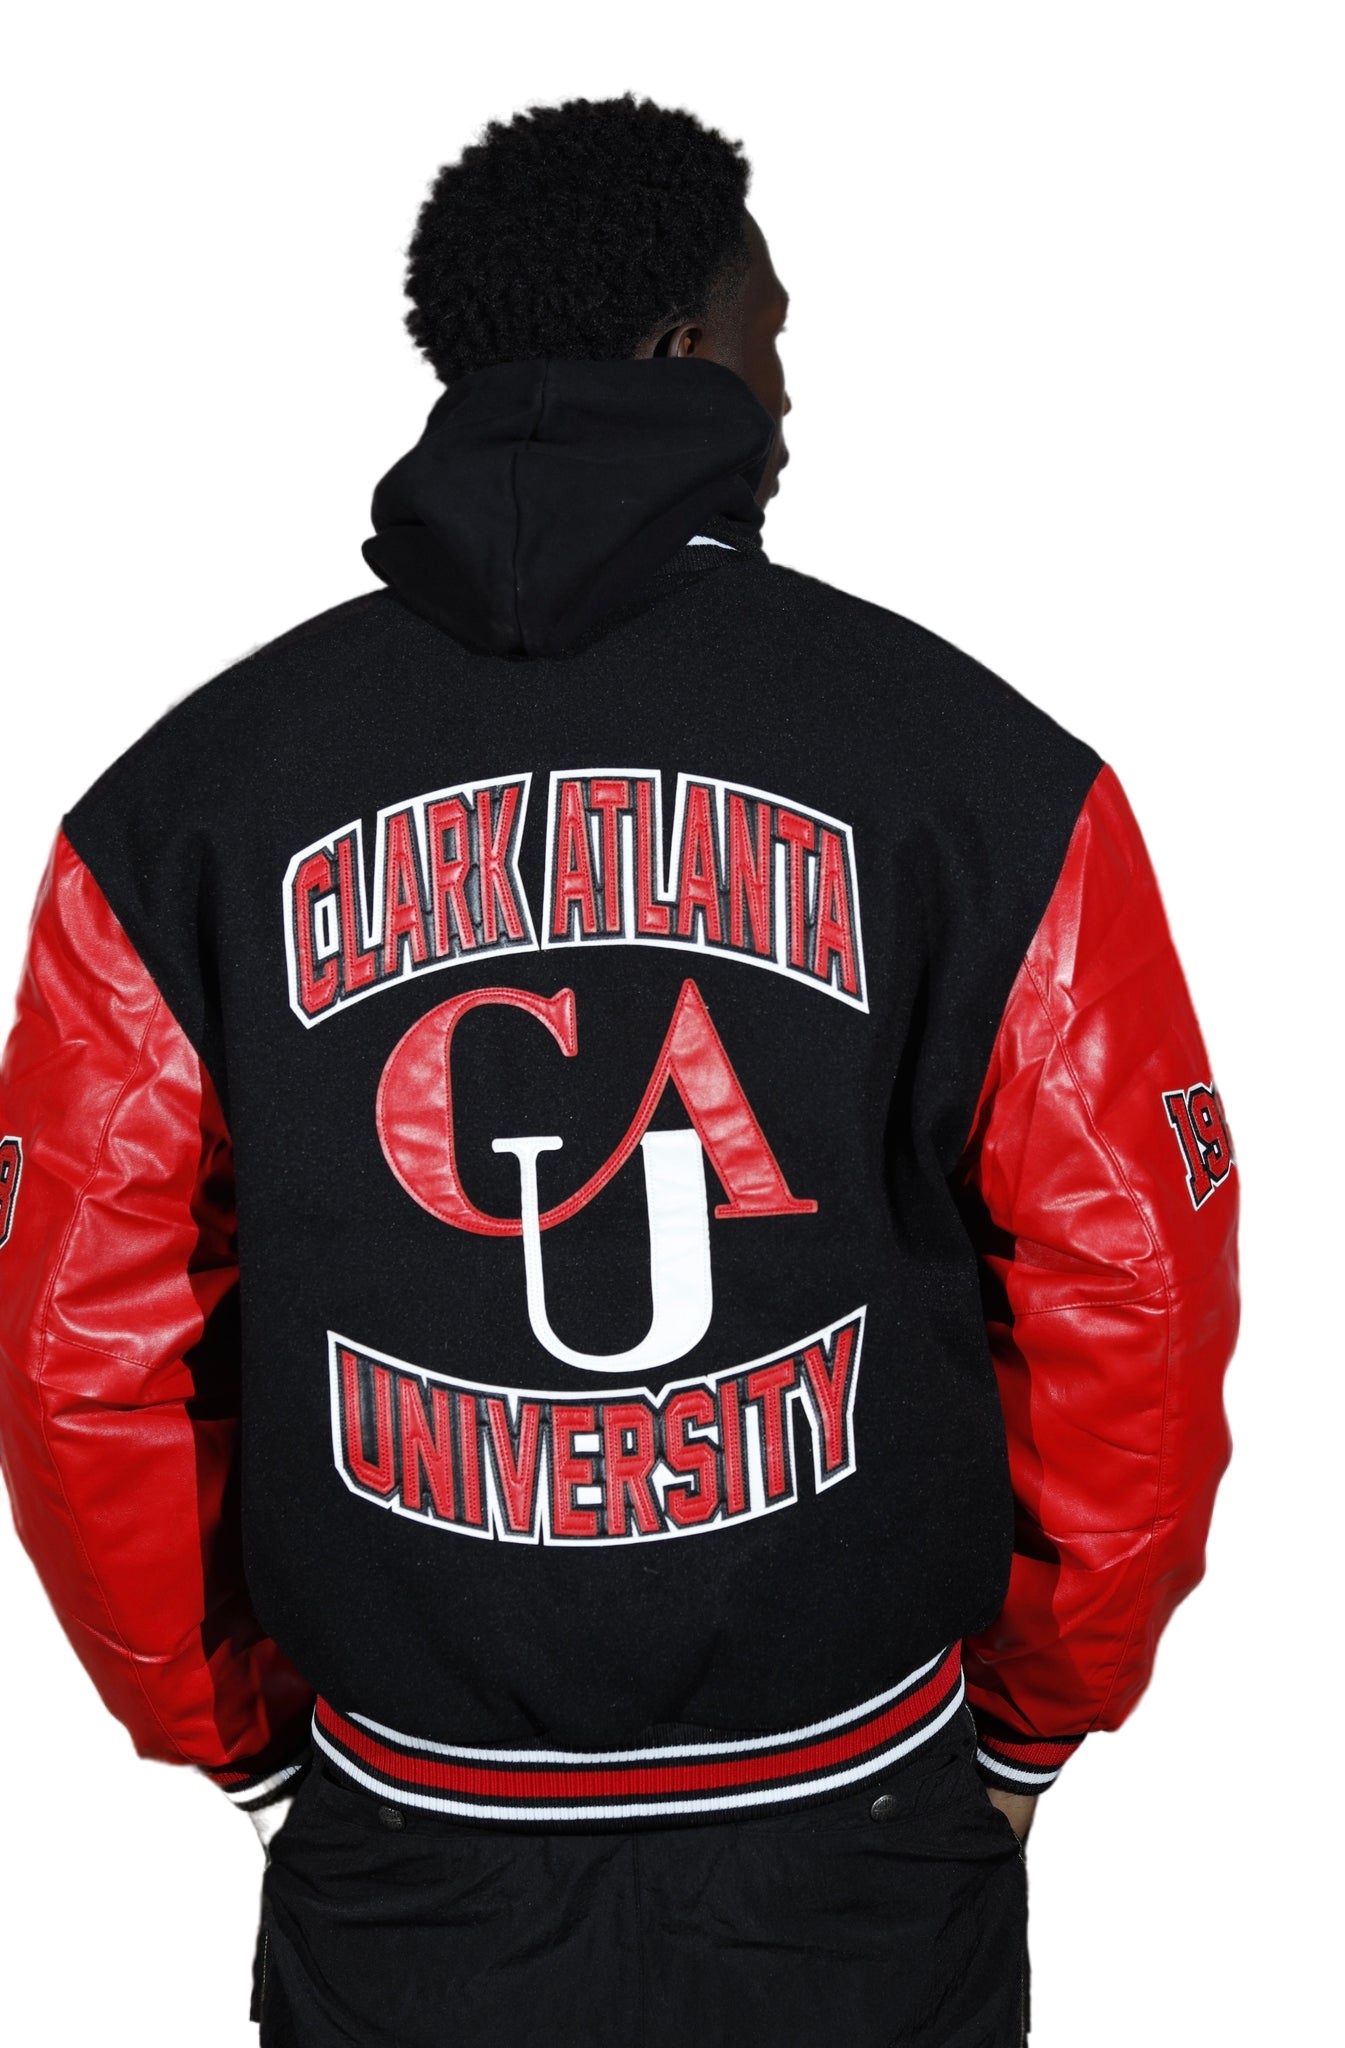 Clark Atlanta University Varsity Jacket